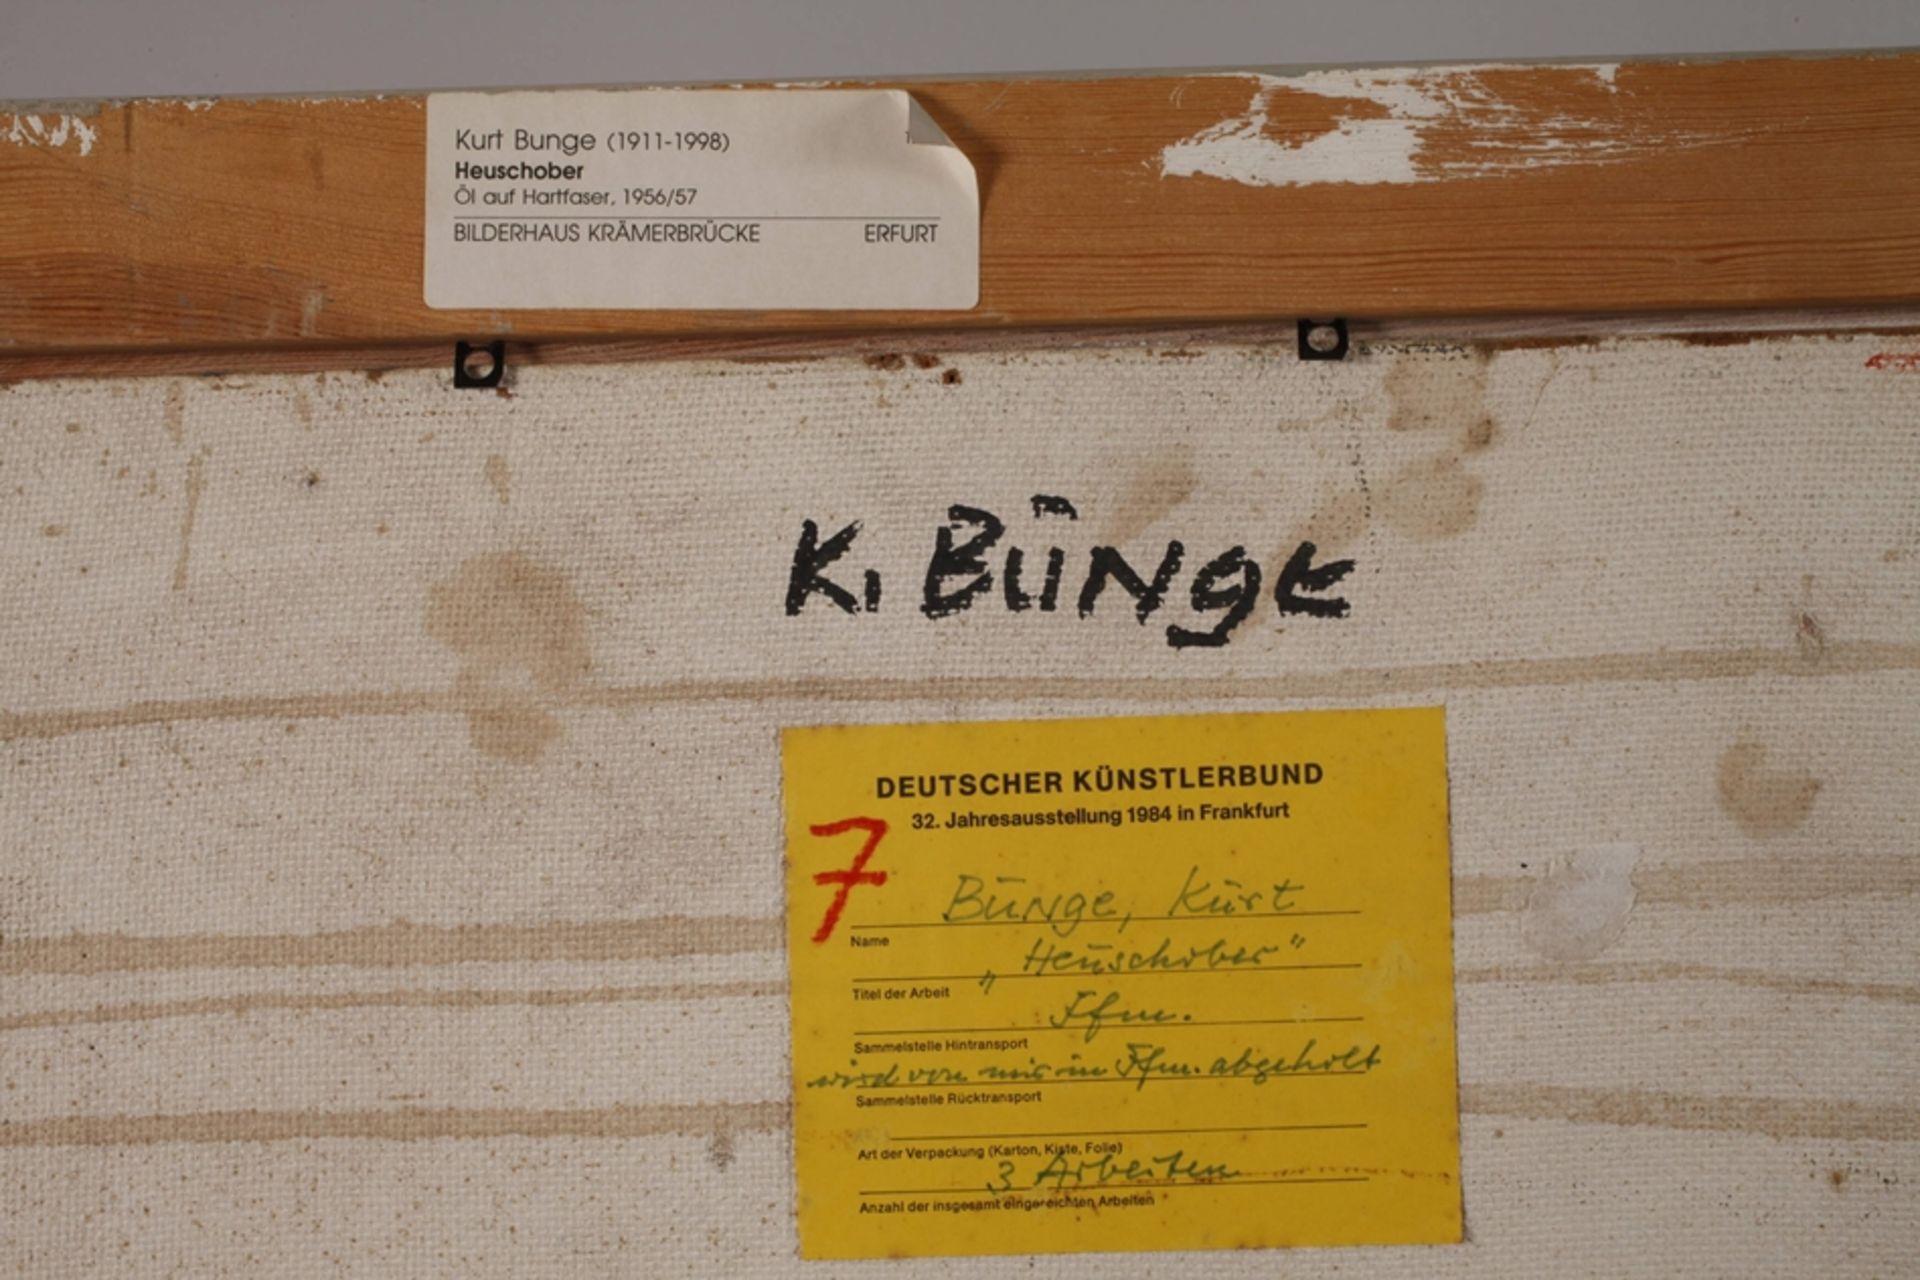 Prof. Kurt Bunge, "Heuschober" - Image 8 of 8